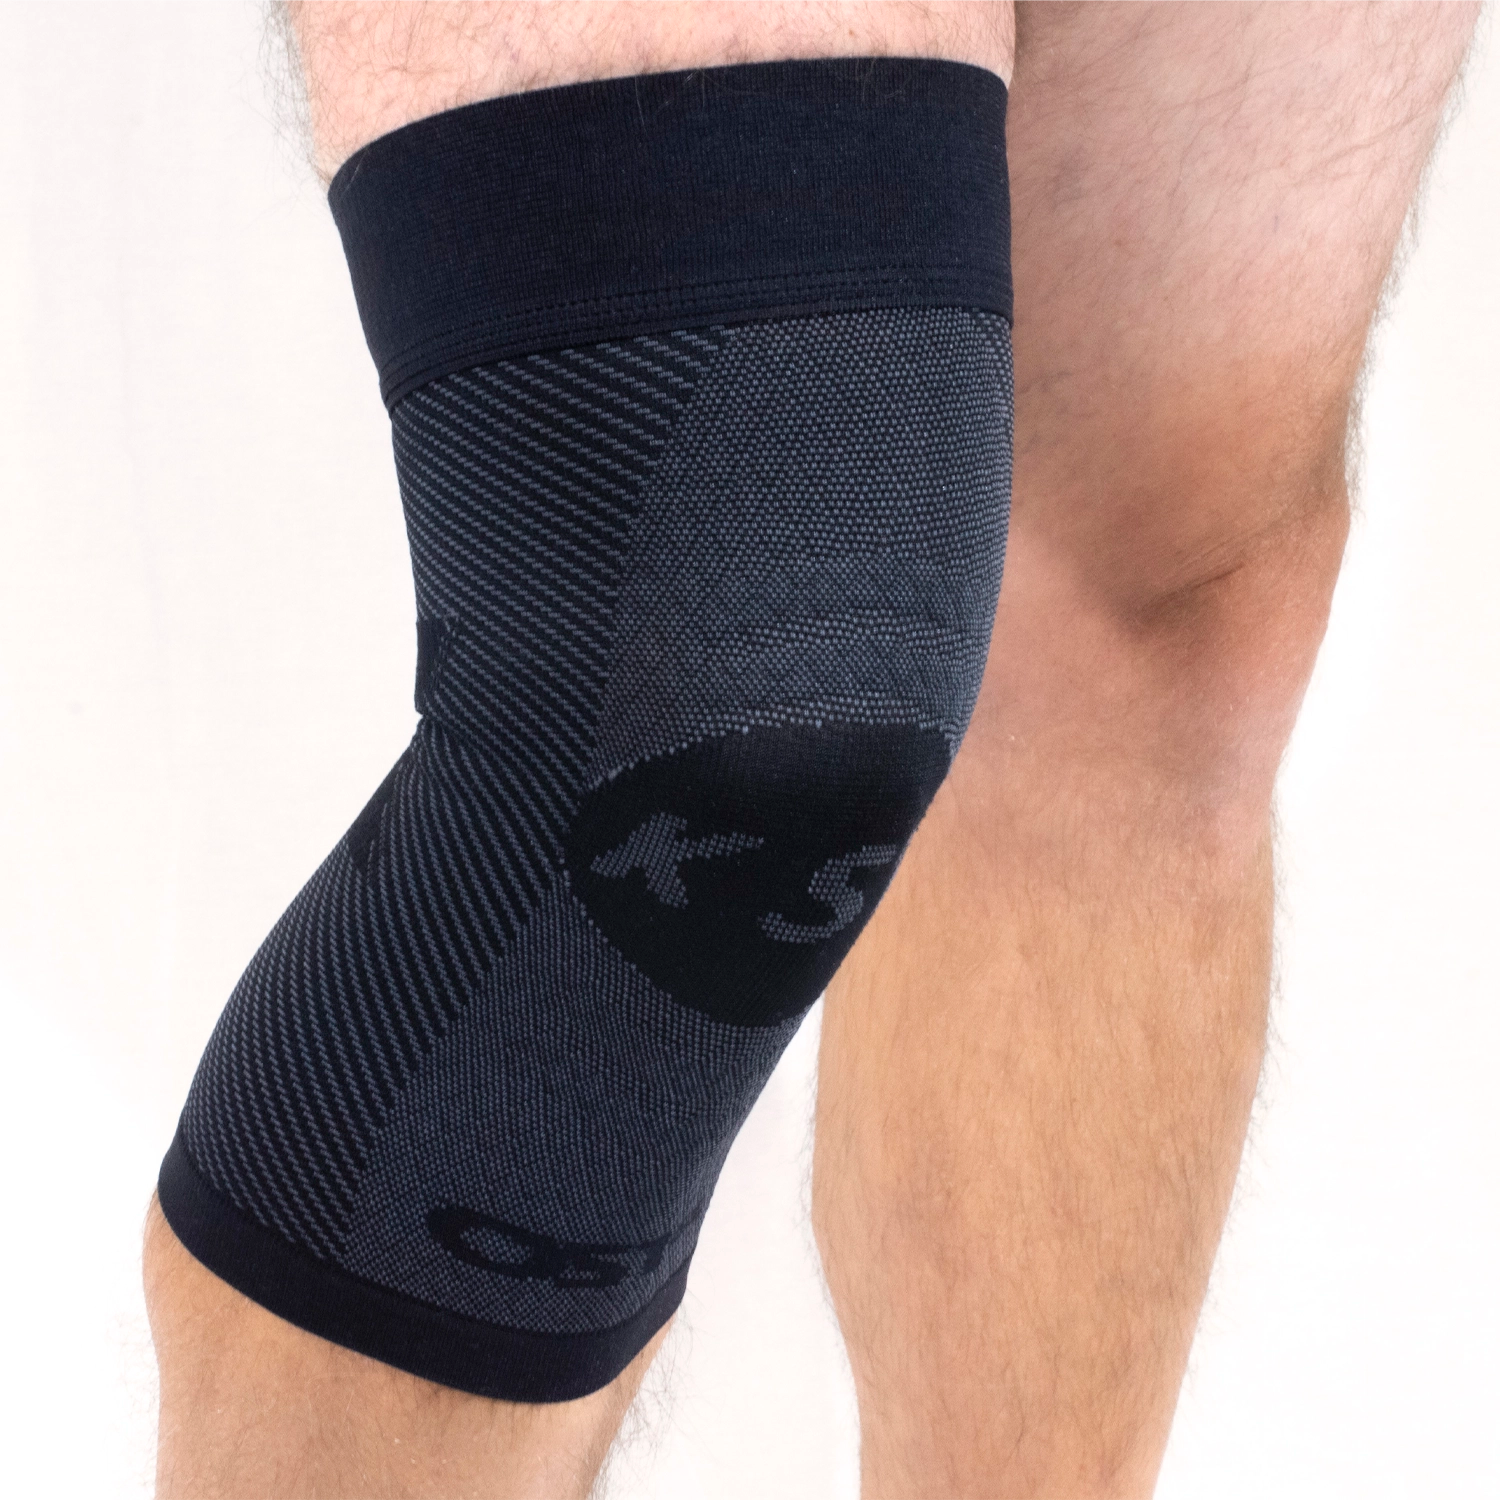 Knee braces - Knee Sleeves - Knee Support - Patella Brace for Knee